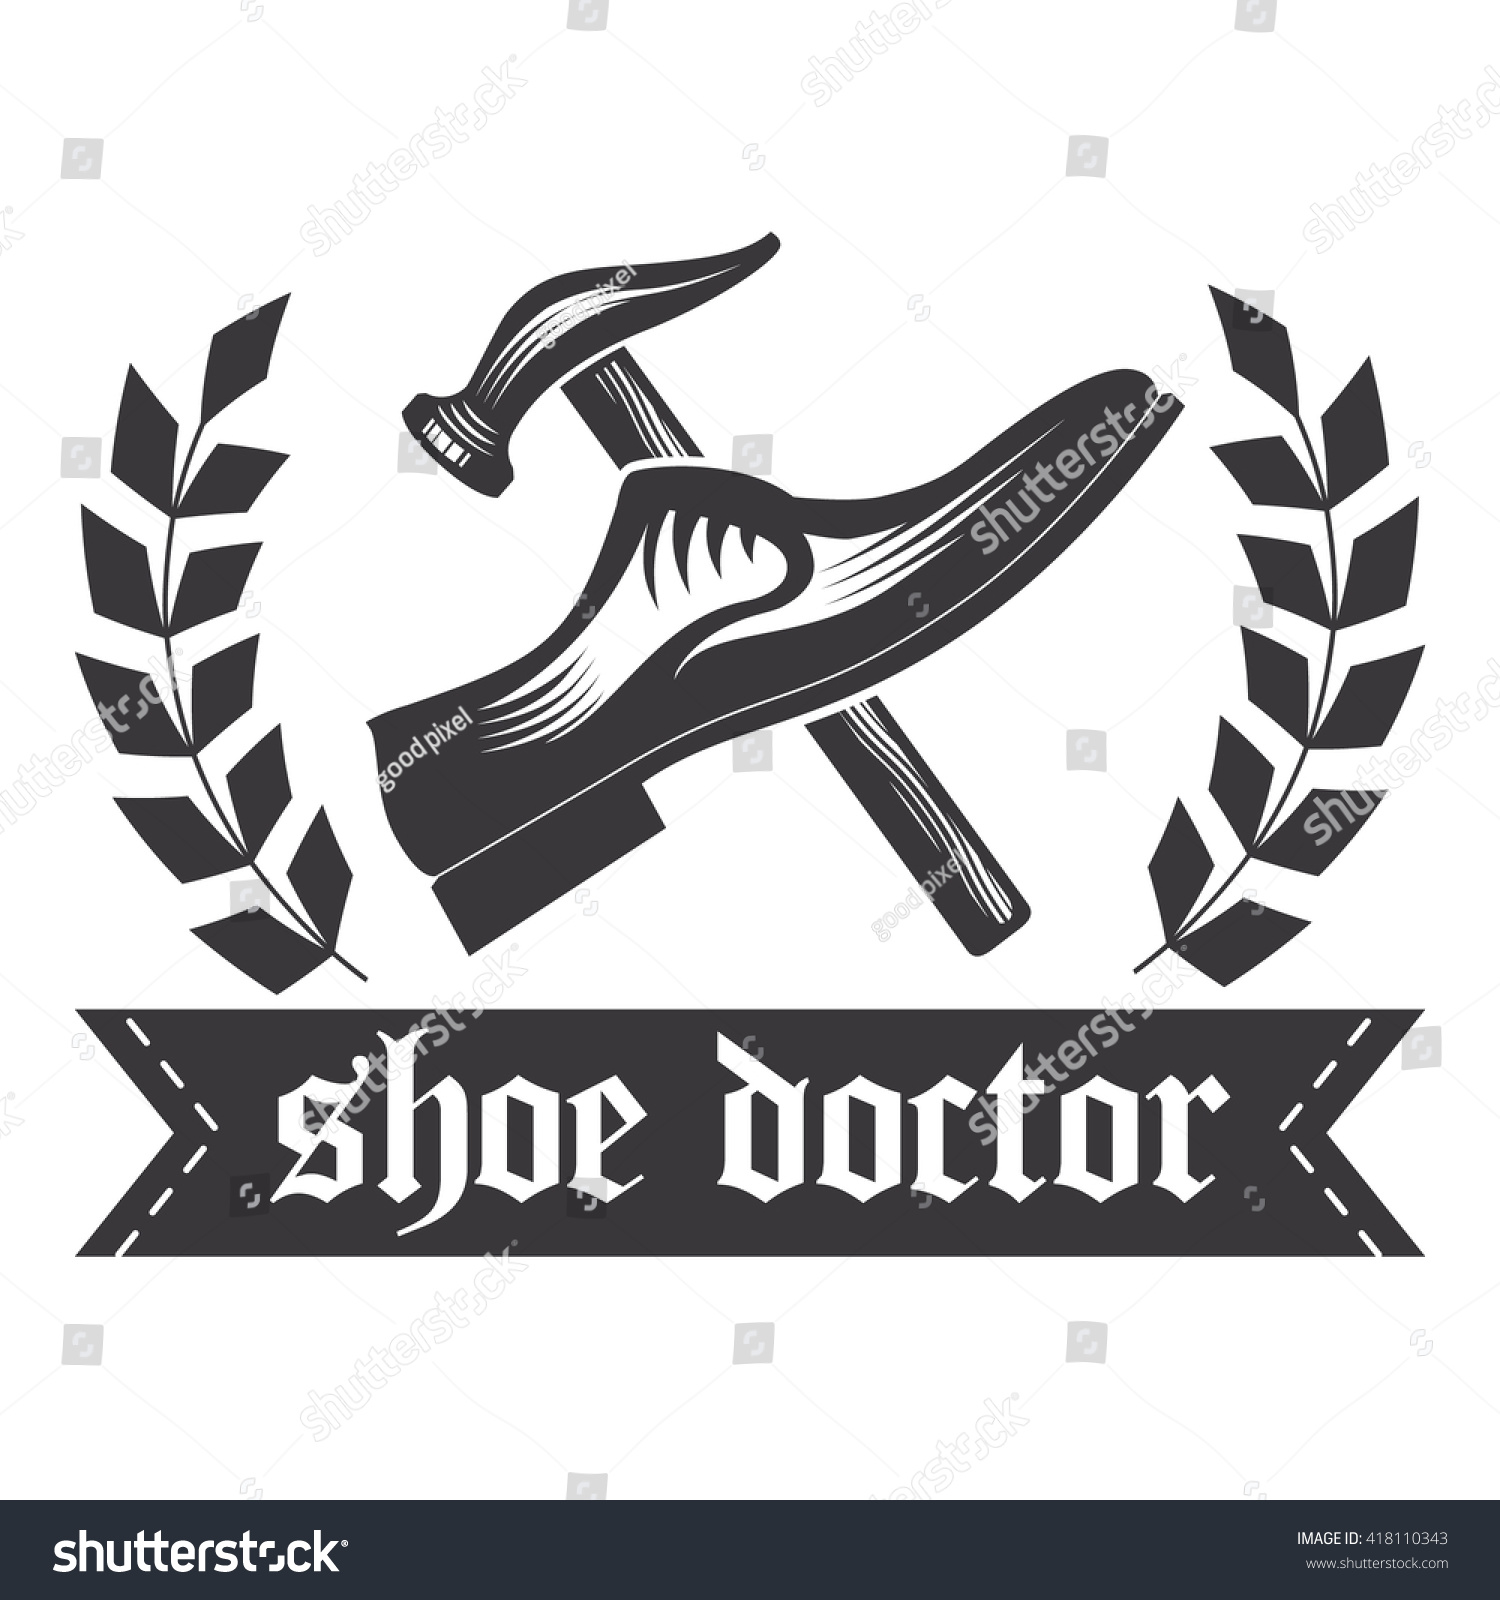 shoe doctor